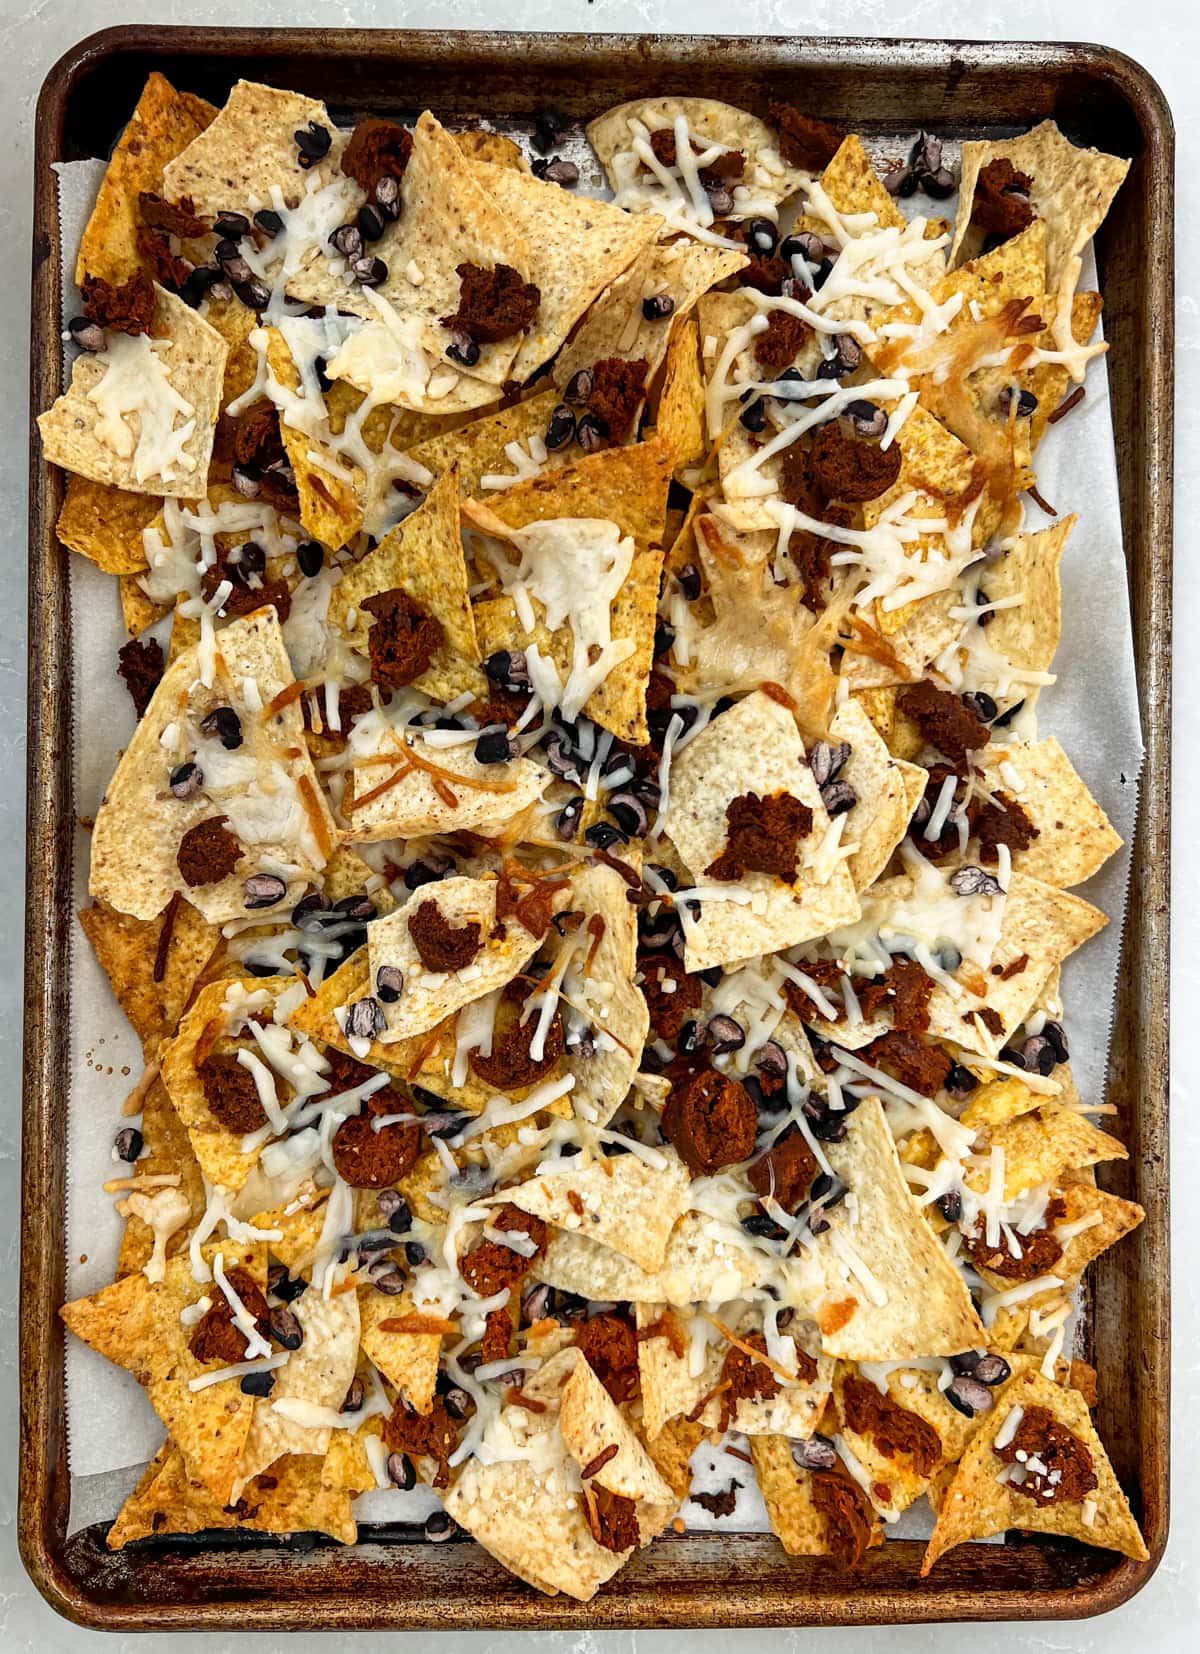 Sheet pan full of baked nachos with vegan sausage and black beans.